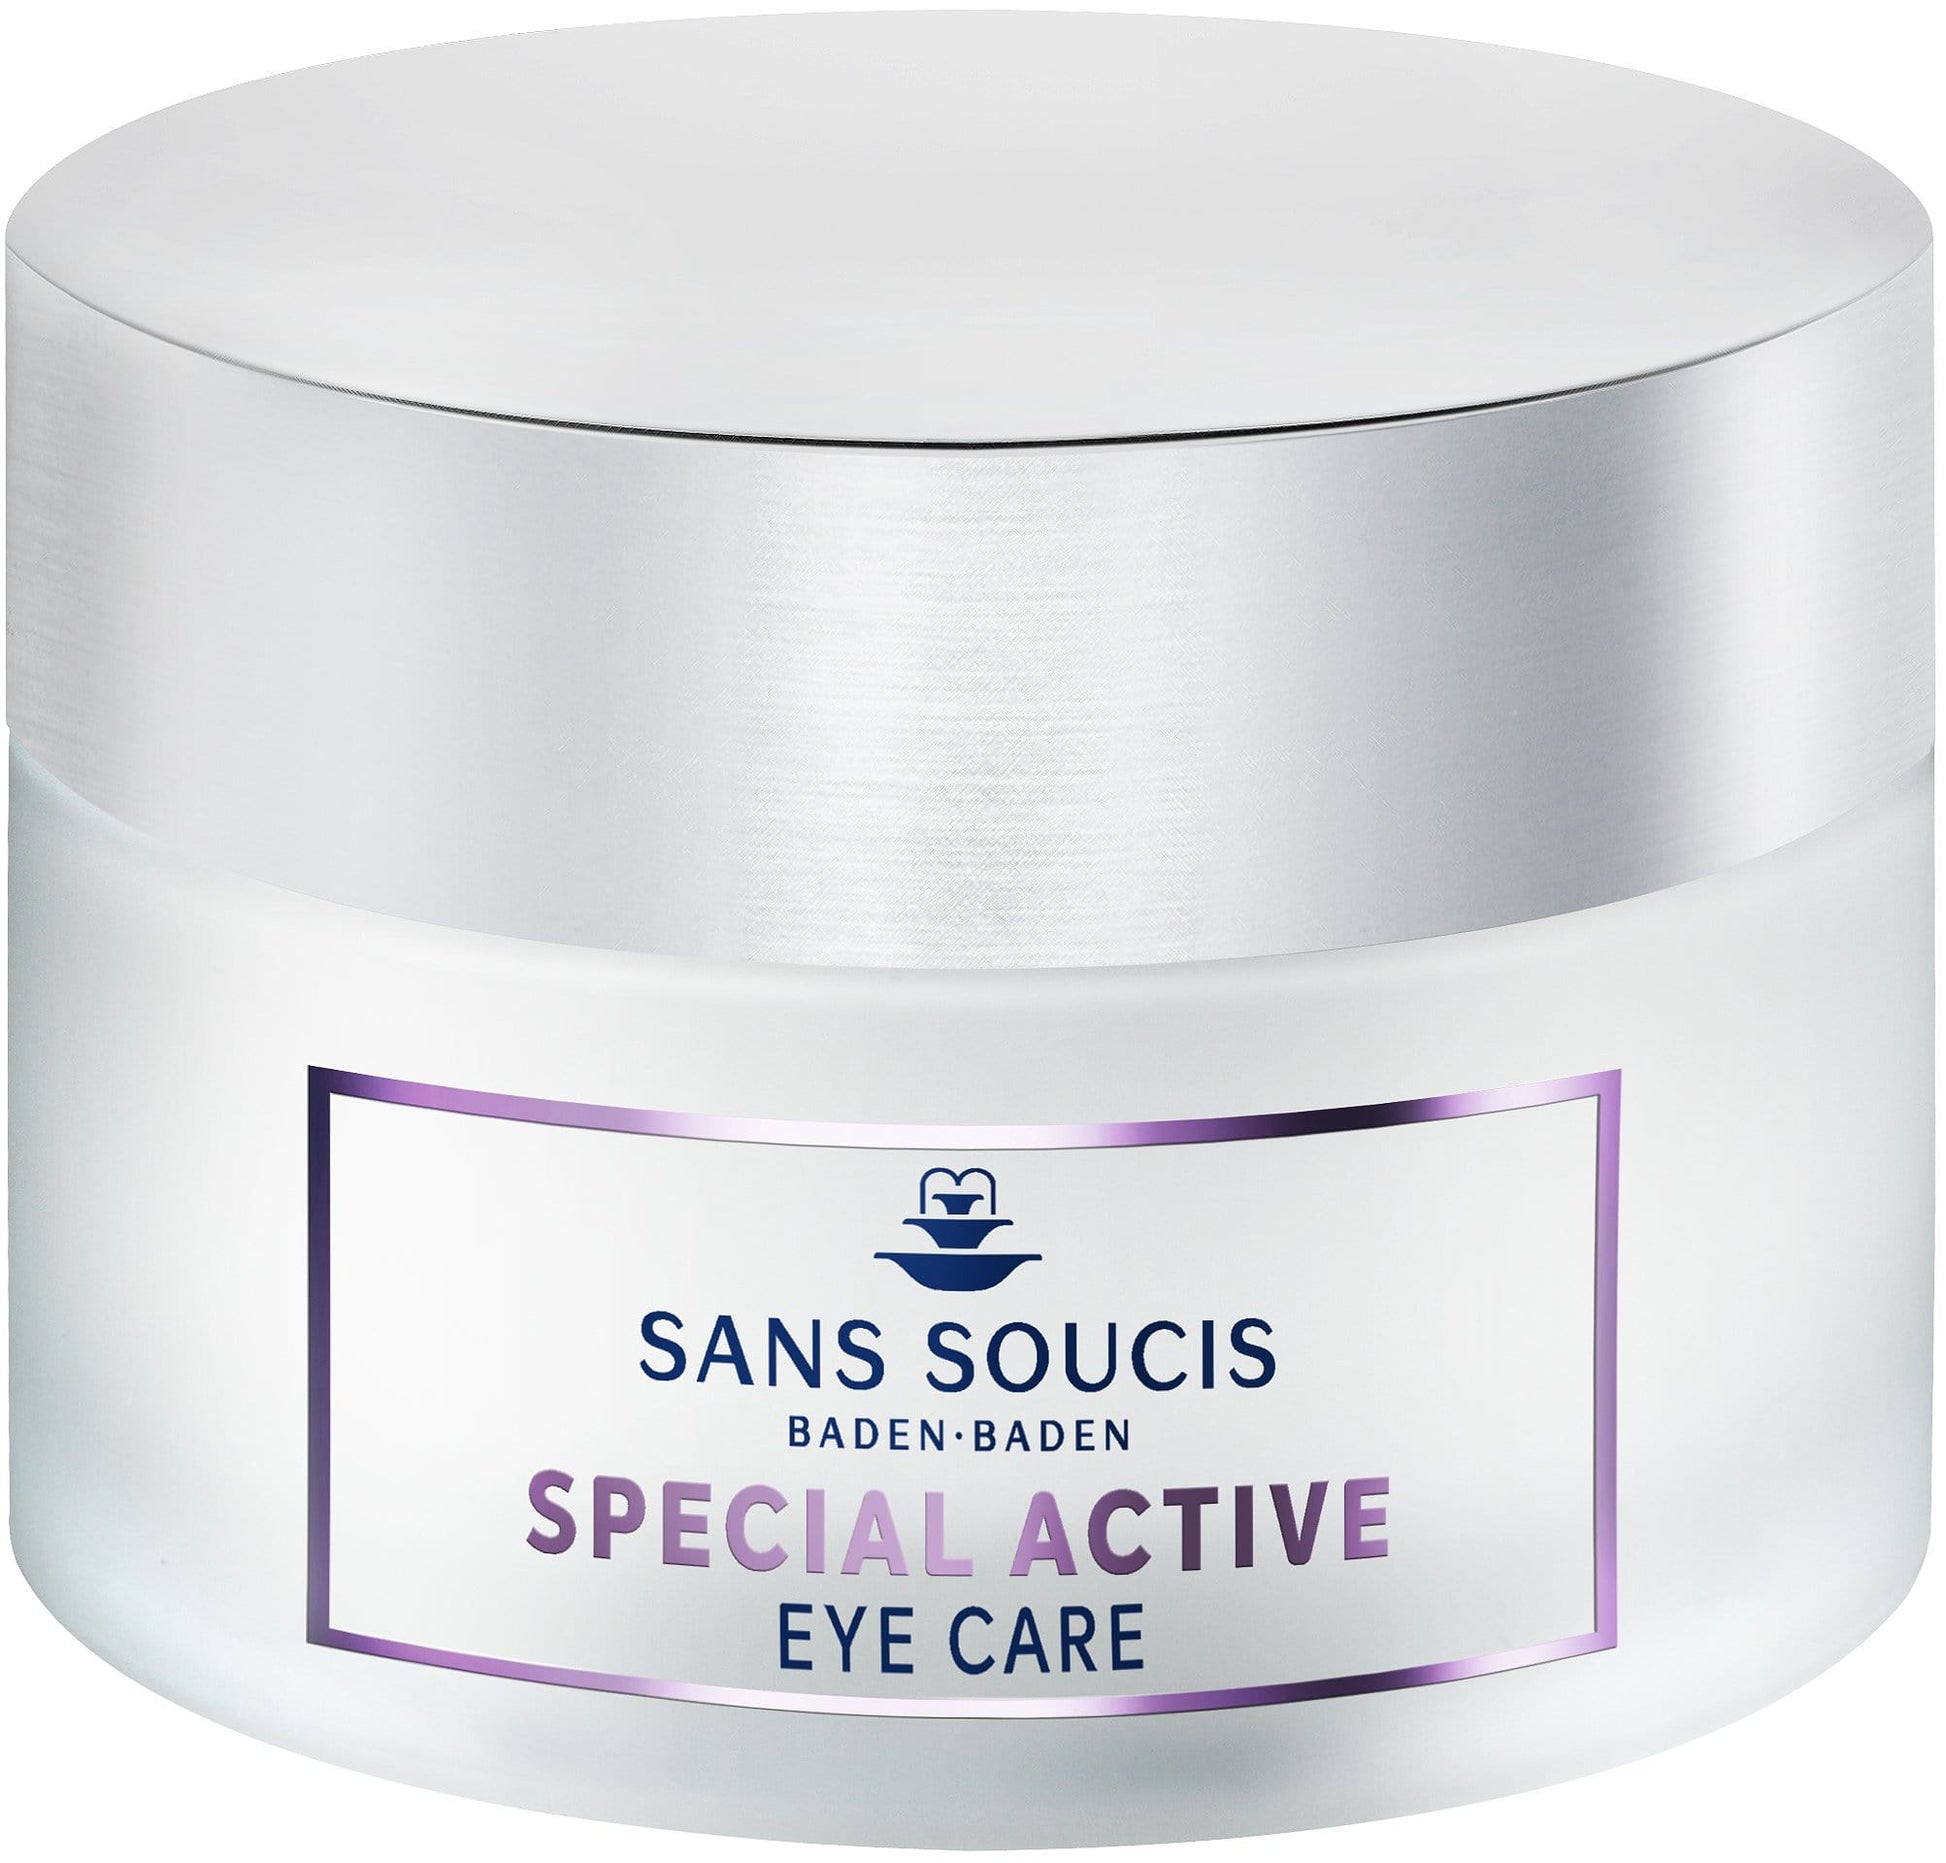 Special Active Firming Eye Care  extra rich - Cuidado especial extra - https://cutis.mx/